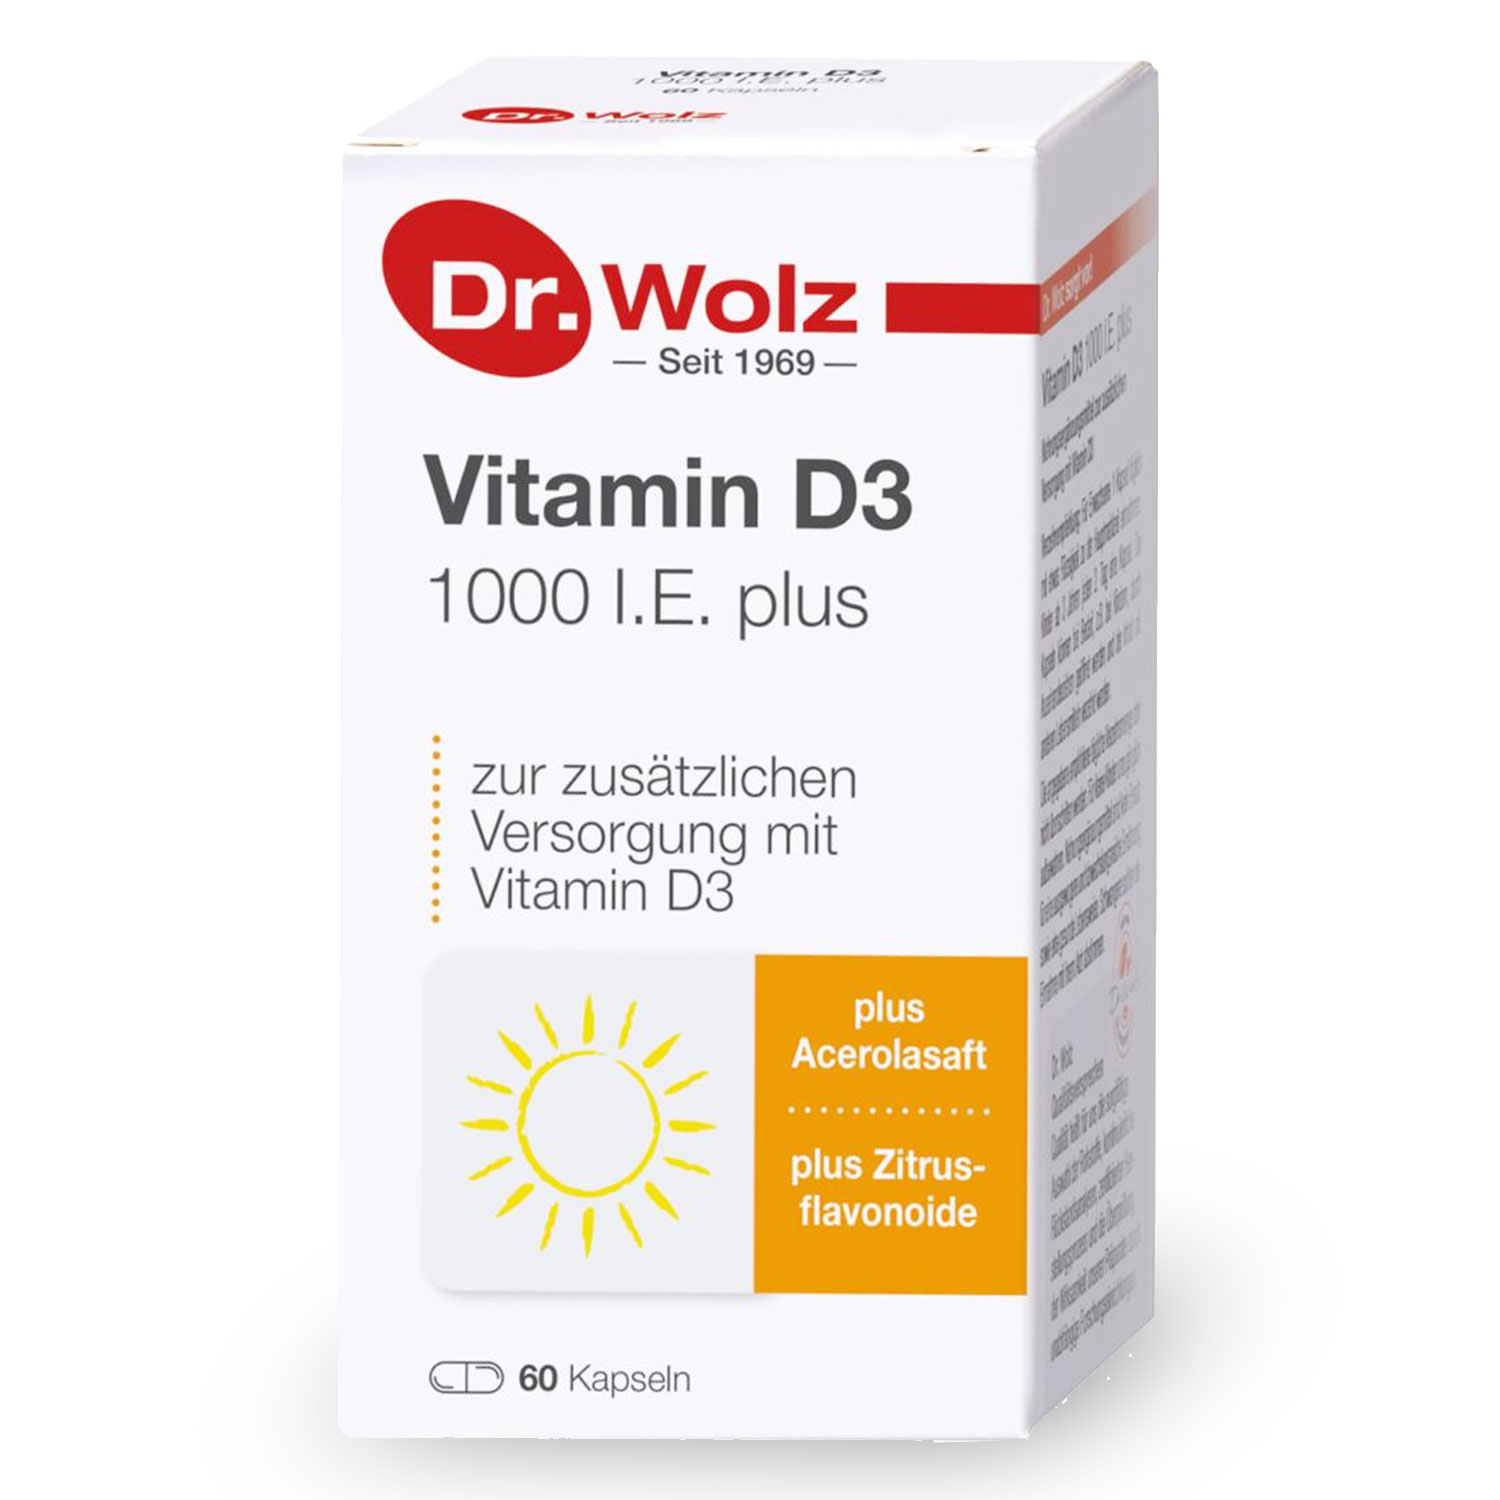 Vitamin D3 1000 I.E. plus von Dr. Wolz - 60 Kapseln